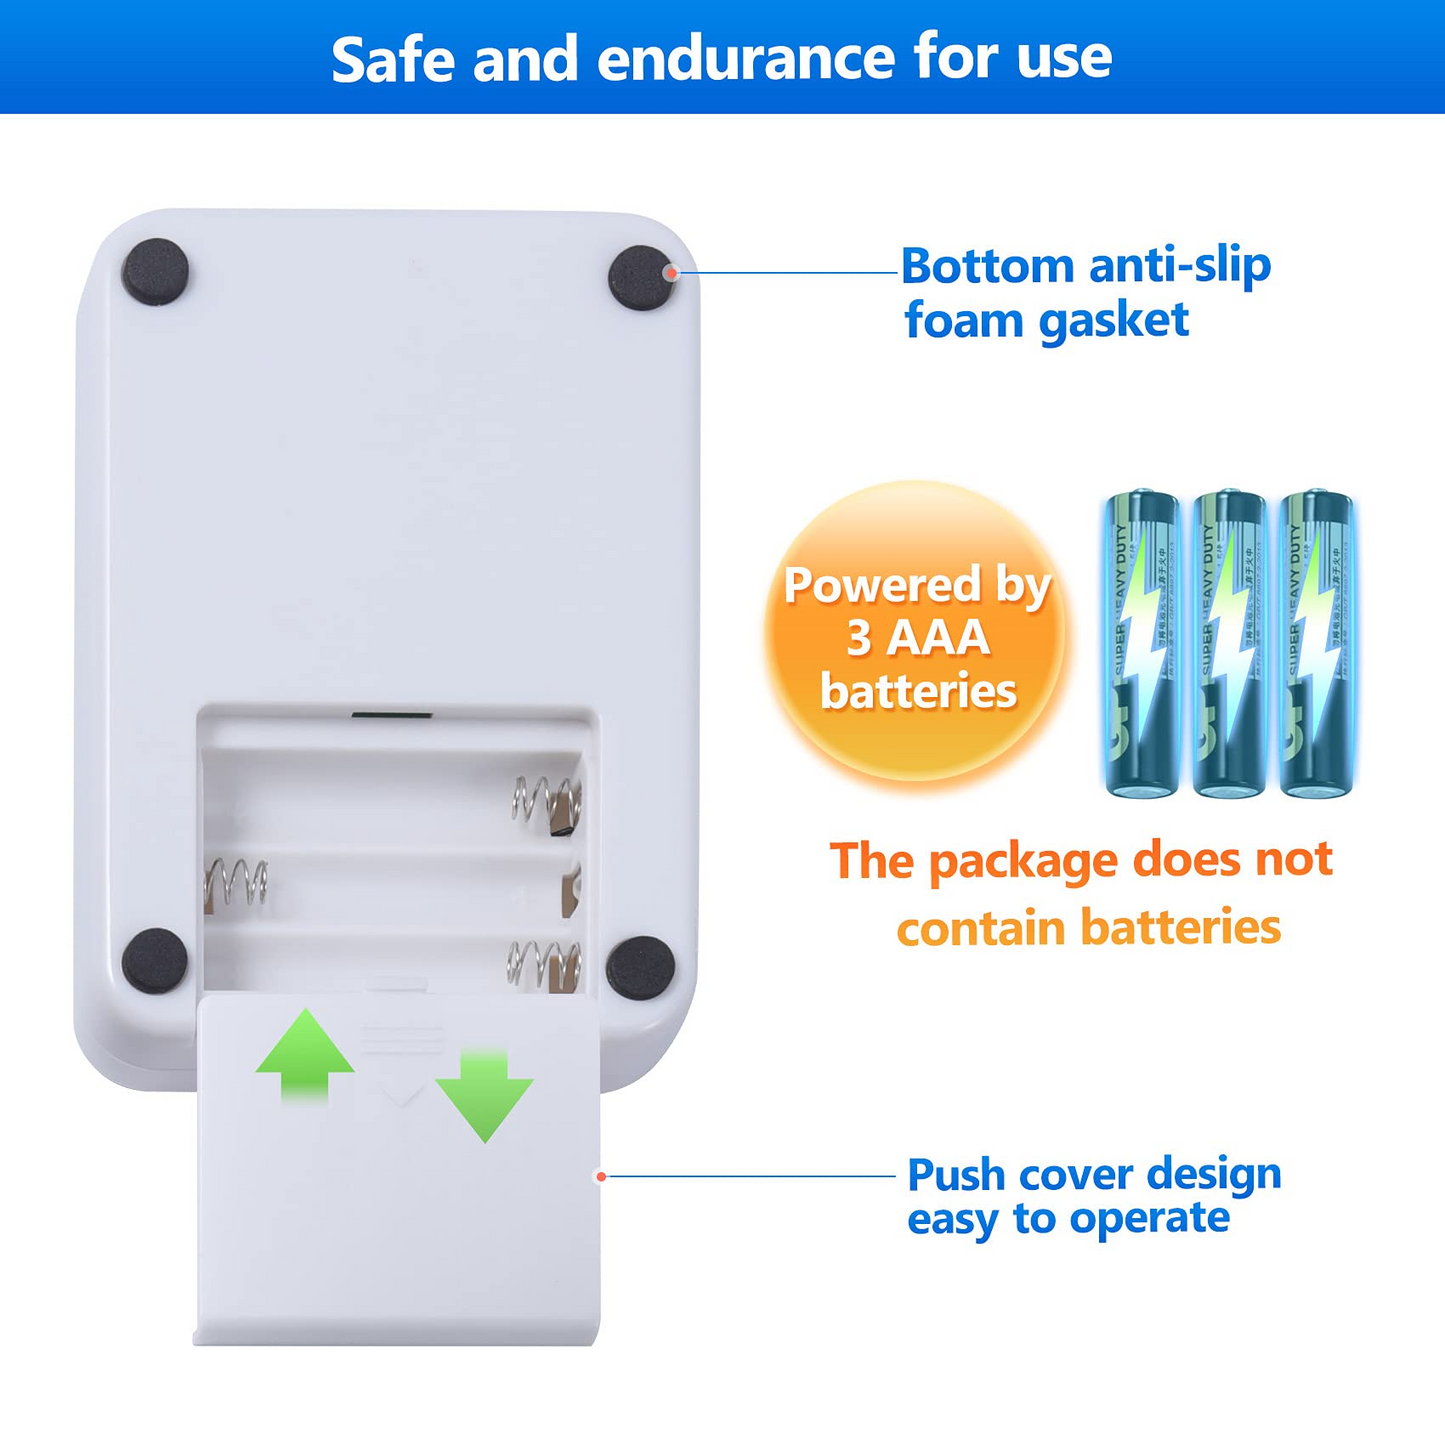 Dental Led Light Meter, Light Cure Power Curing Tester